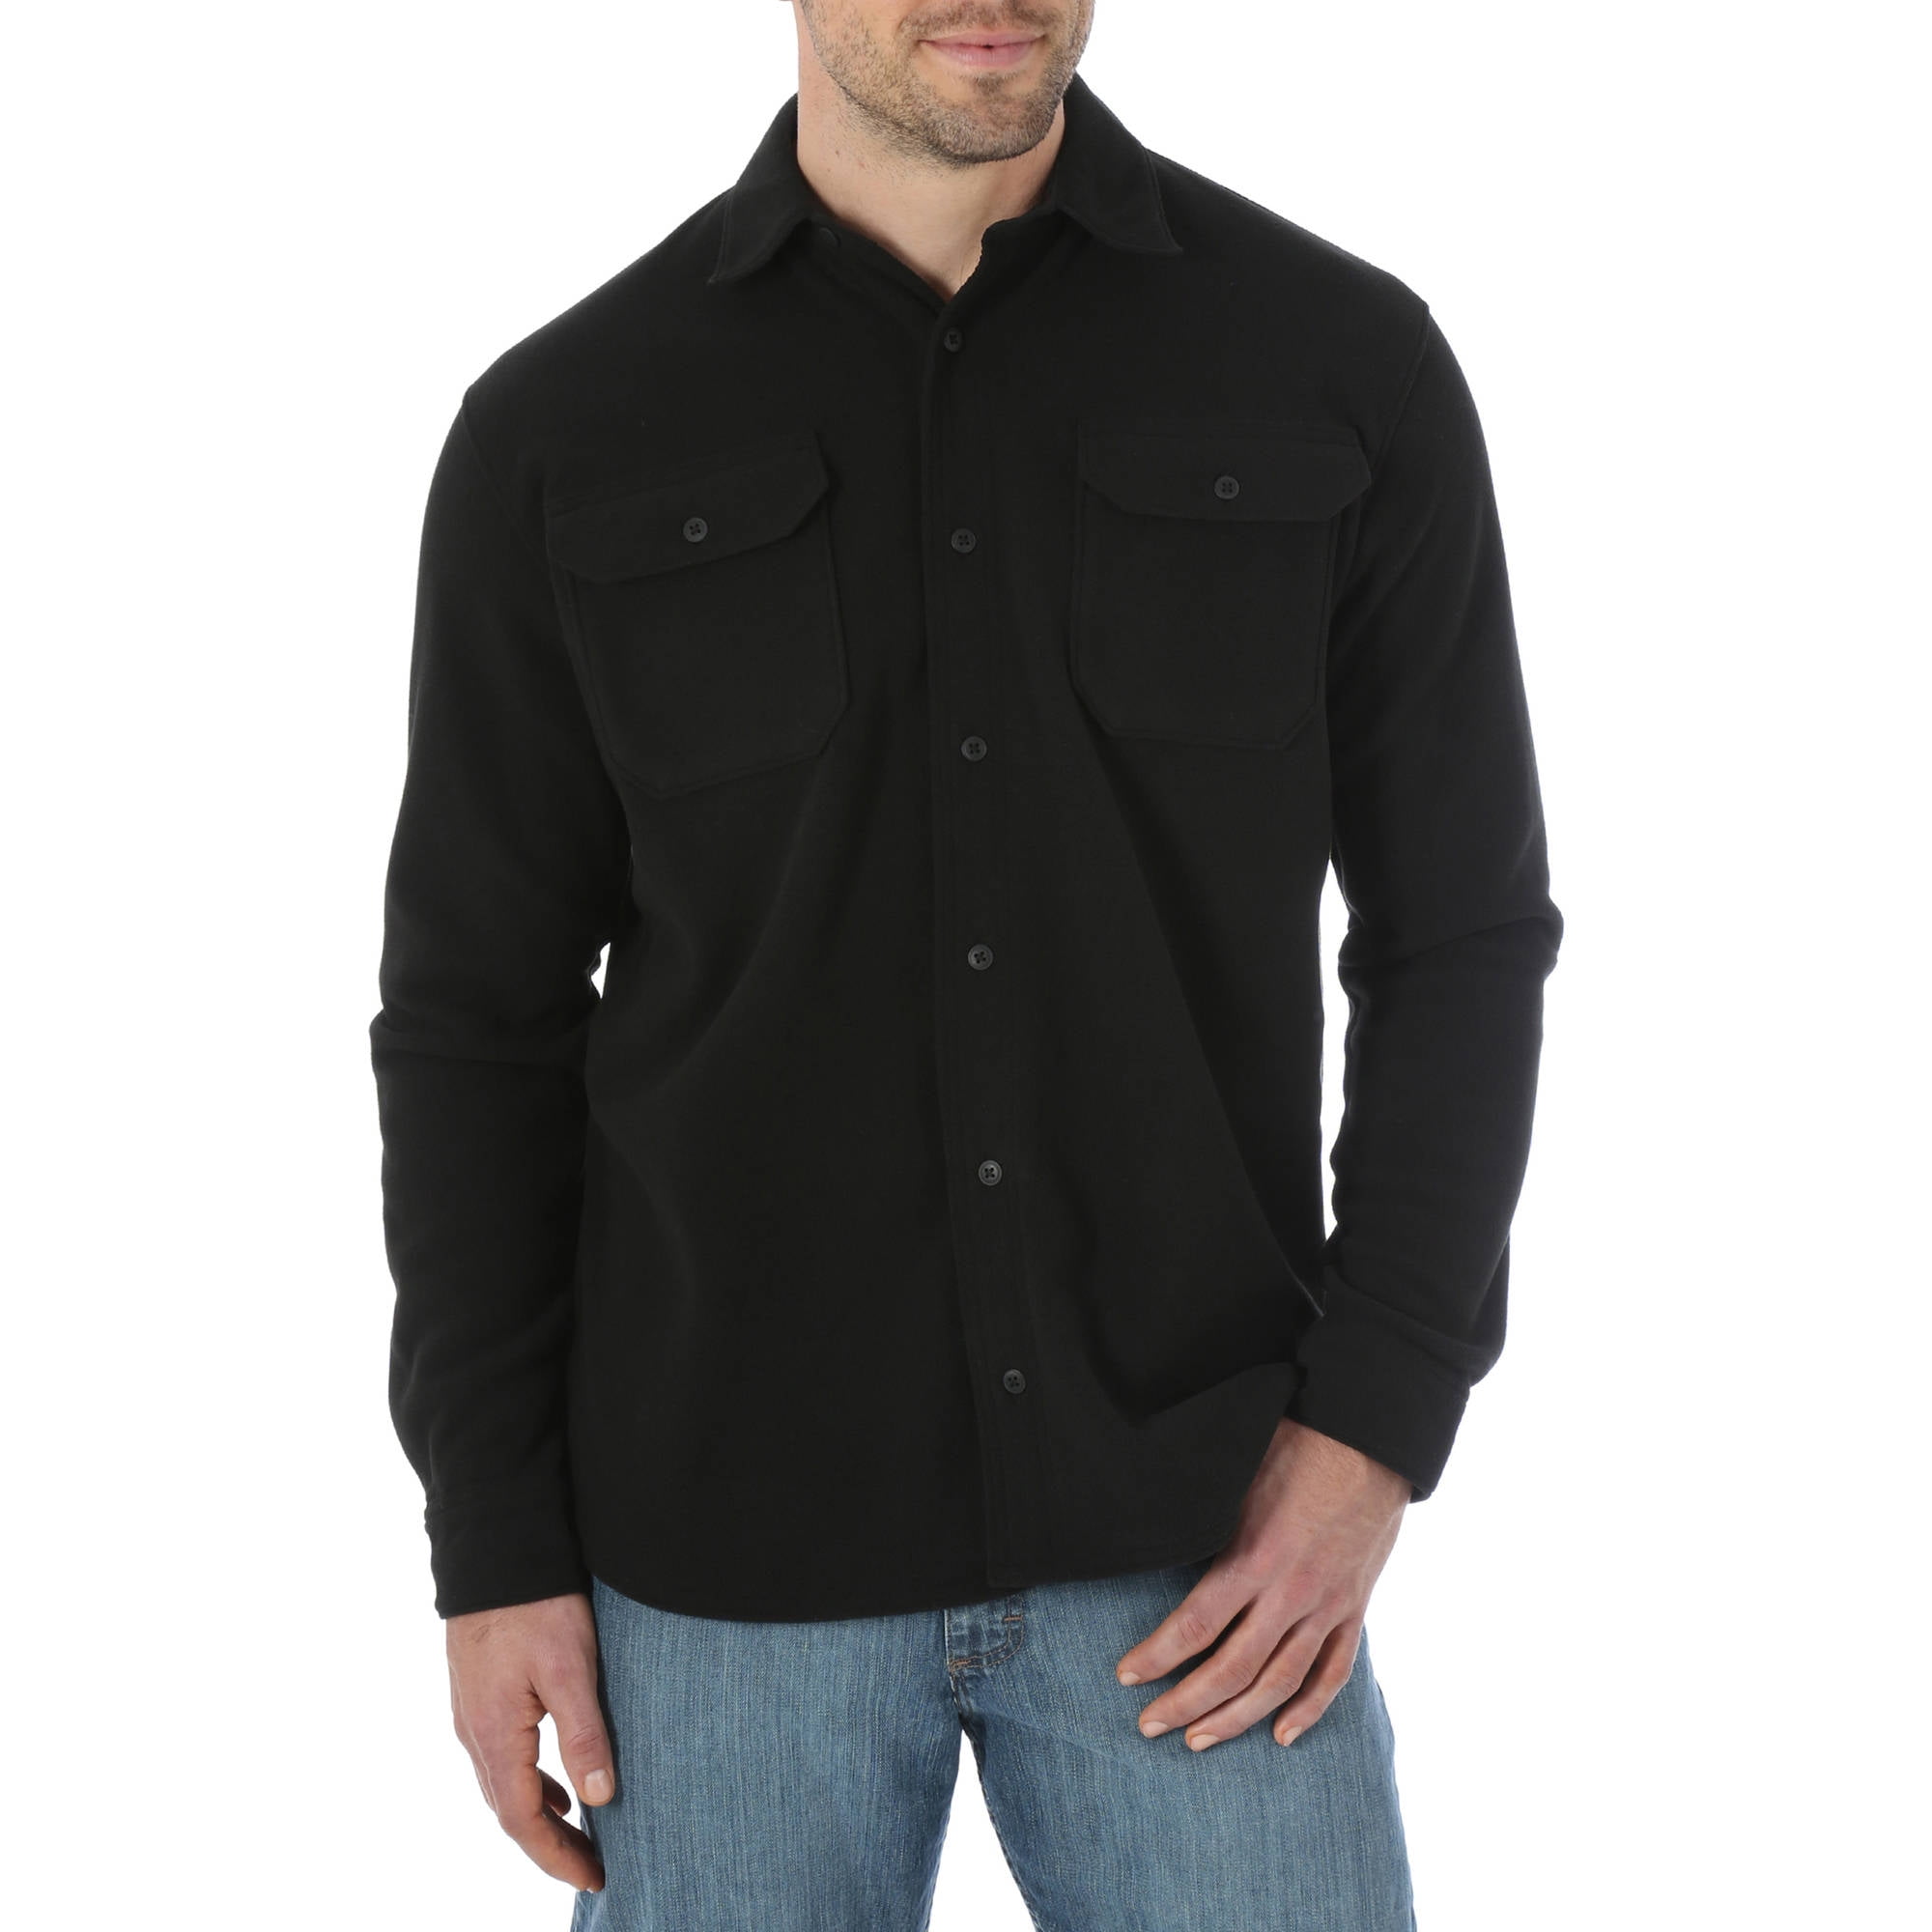 KLJR Men Long Sleeve Warm Fleece Slim Fit Solid Color Button Down Shirts